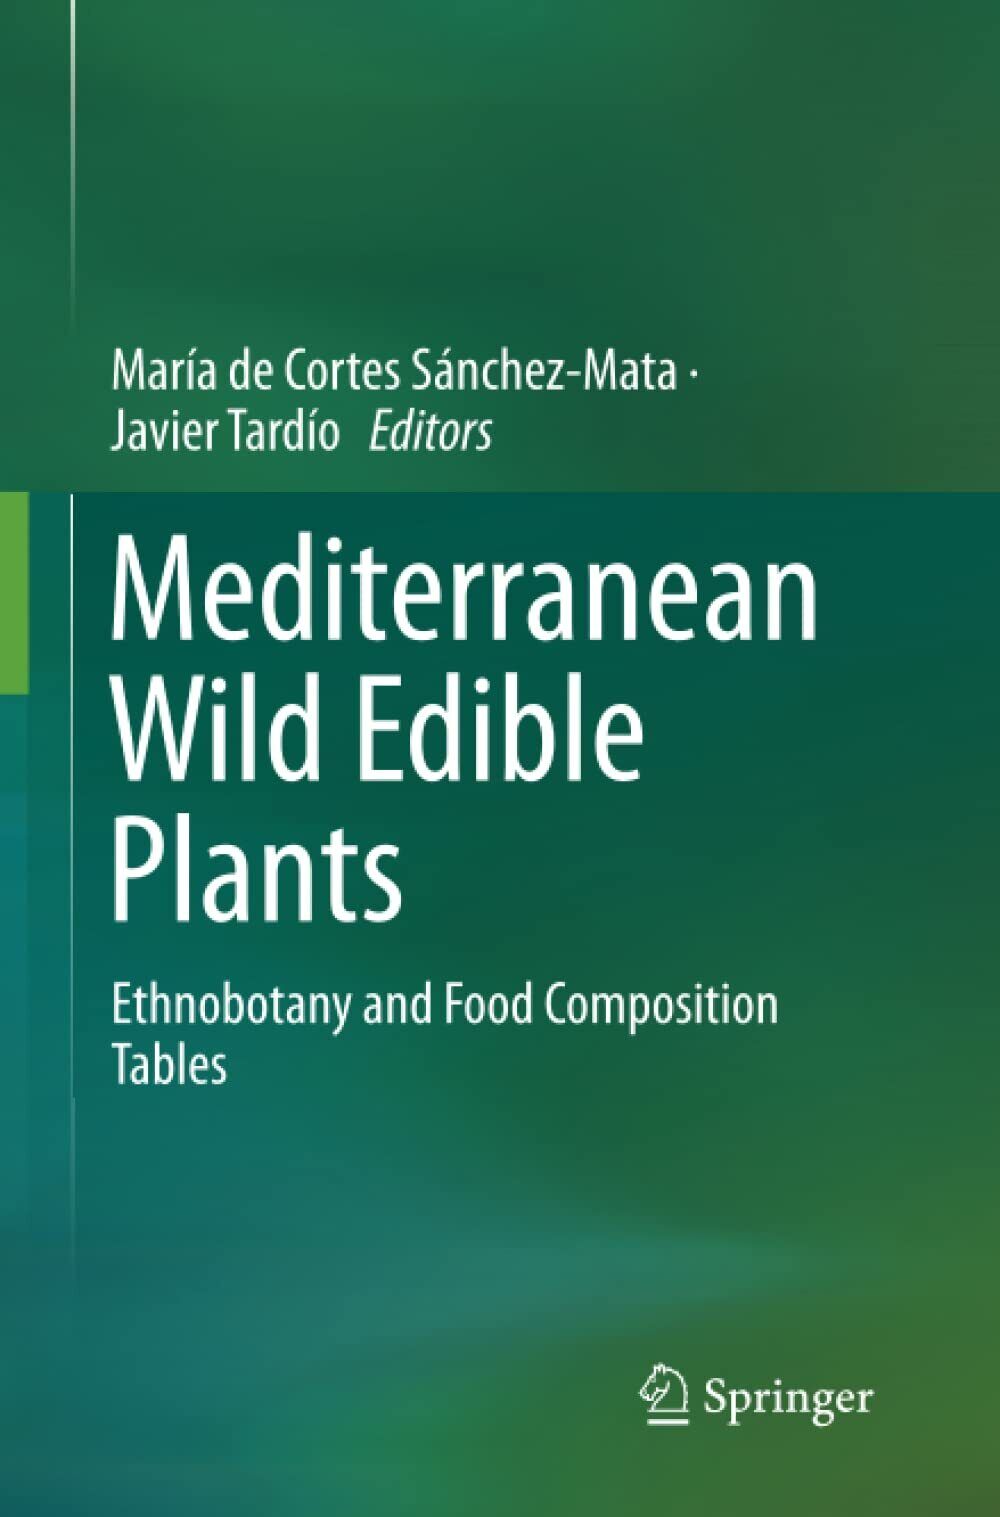 Mediterranean Wild Edible Plants - Spinger, 2018